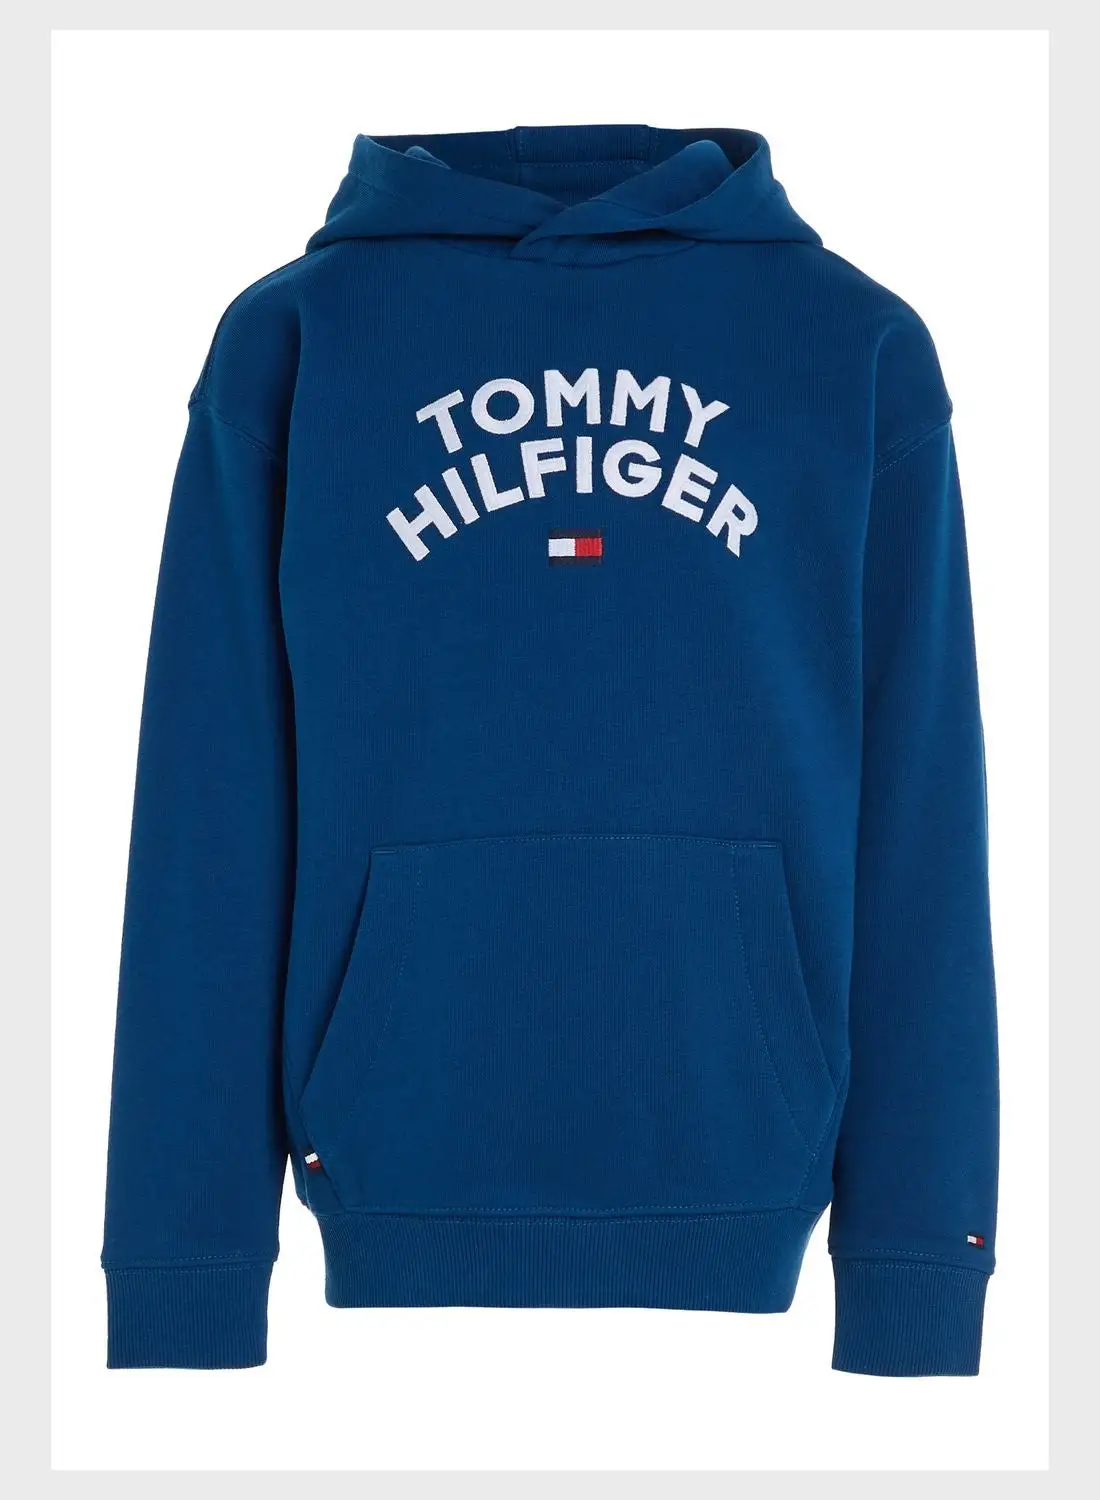 TOMMY HILFIGER Youth Logo Hoodie